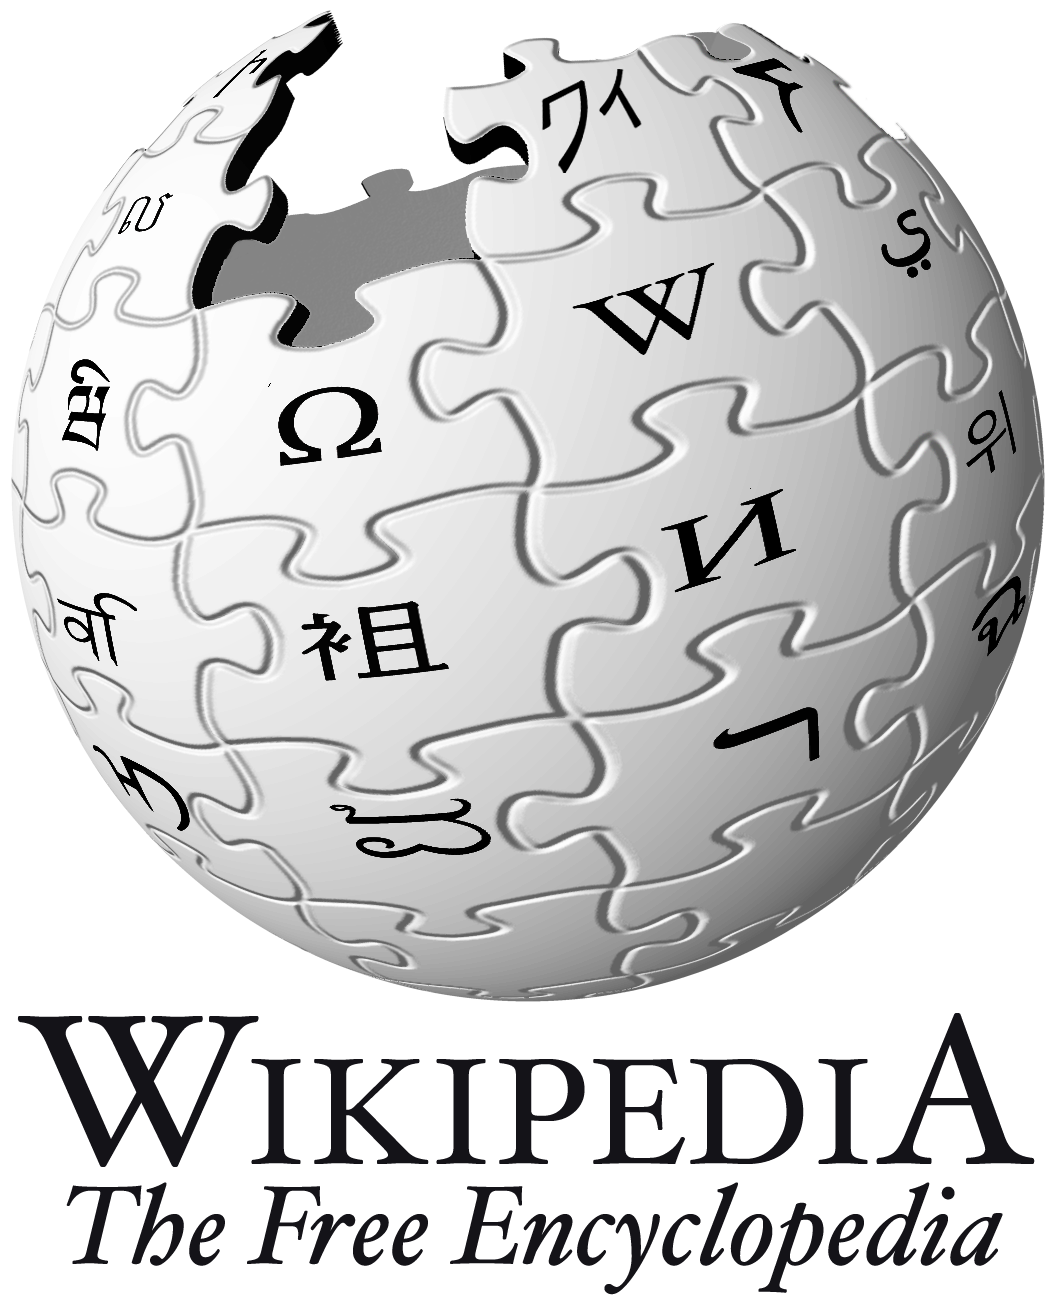 Wikimedia Foundation Logo Name